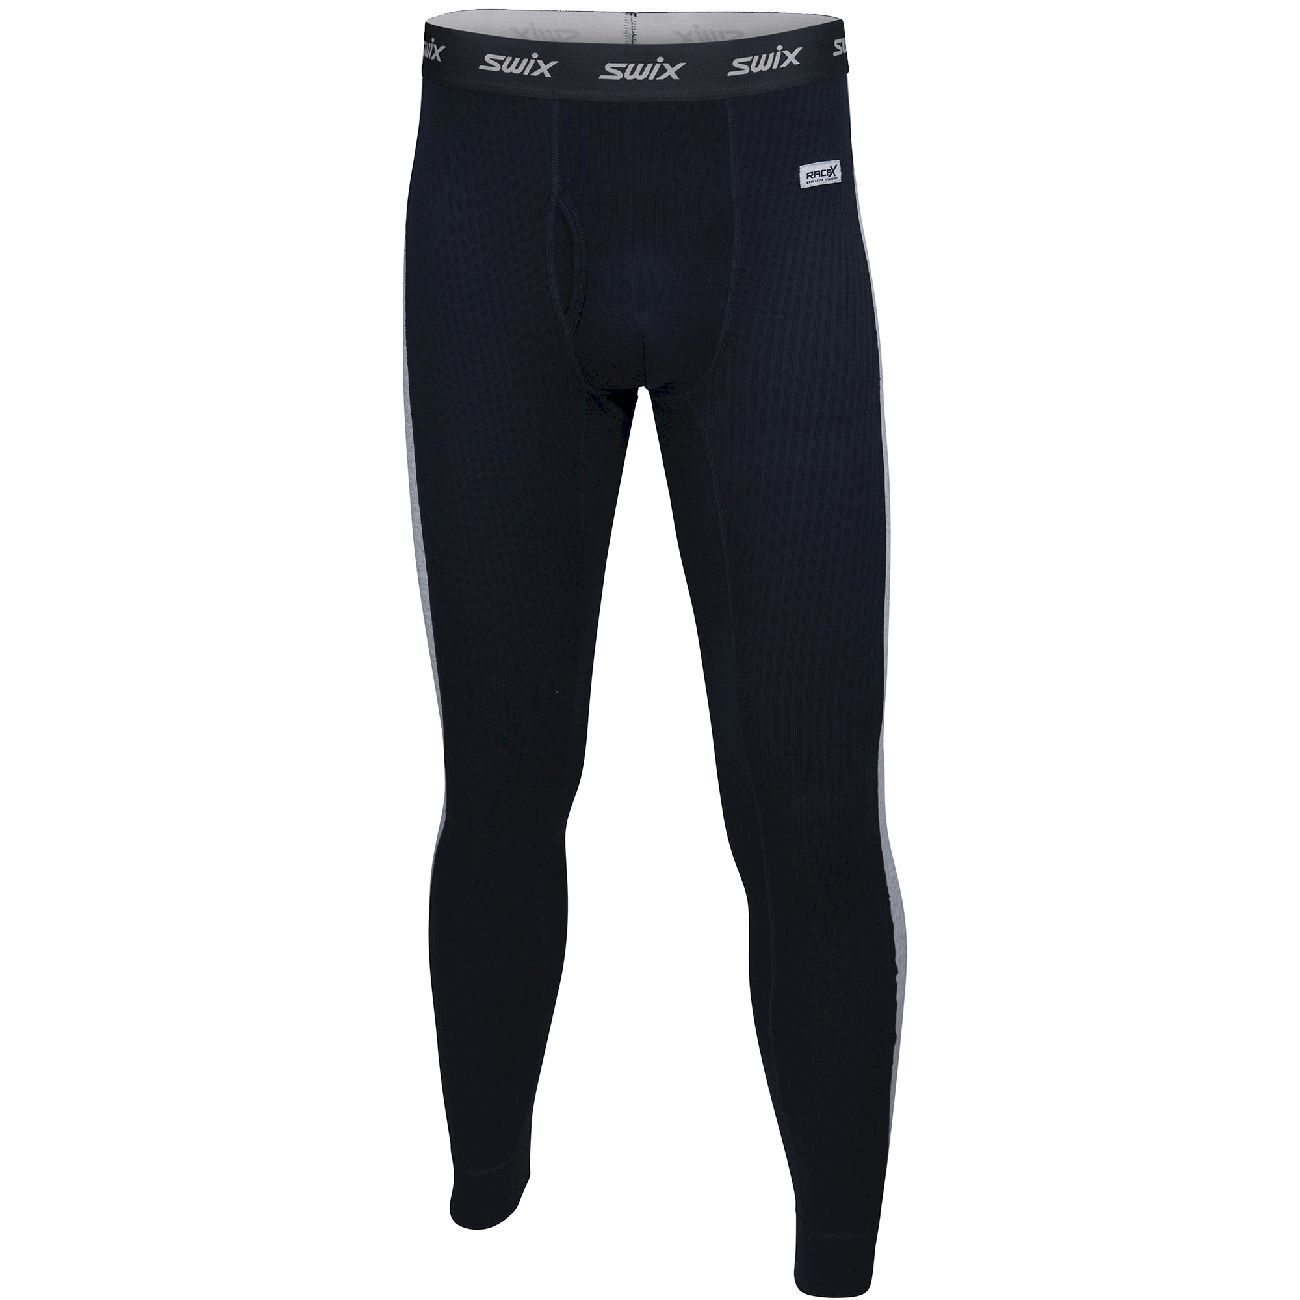 Swix Racex Bodywear Pant - Collant thermique homme